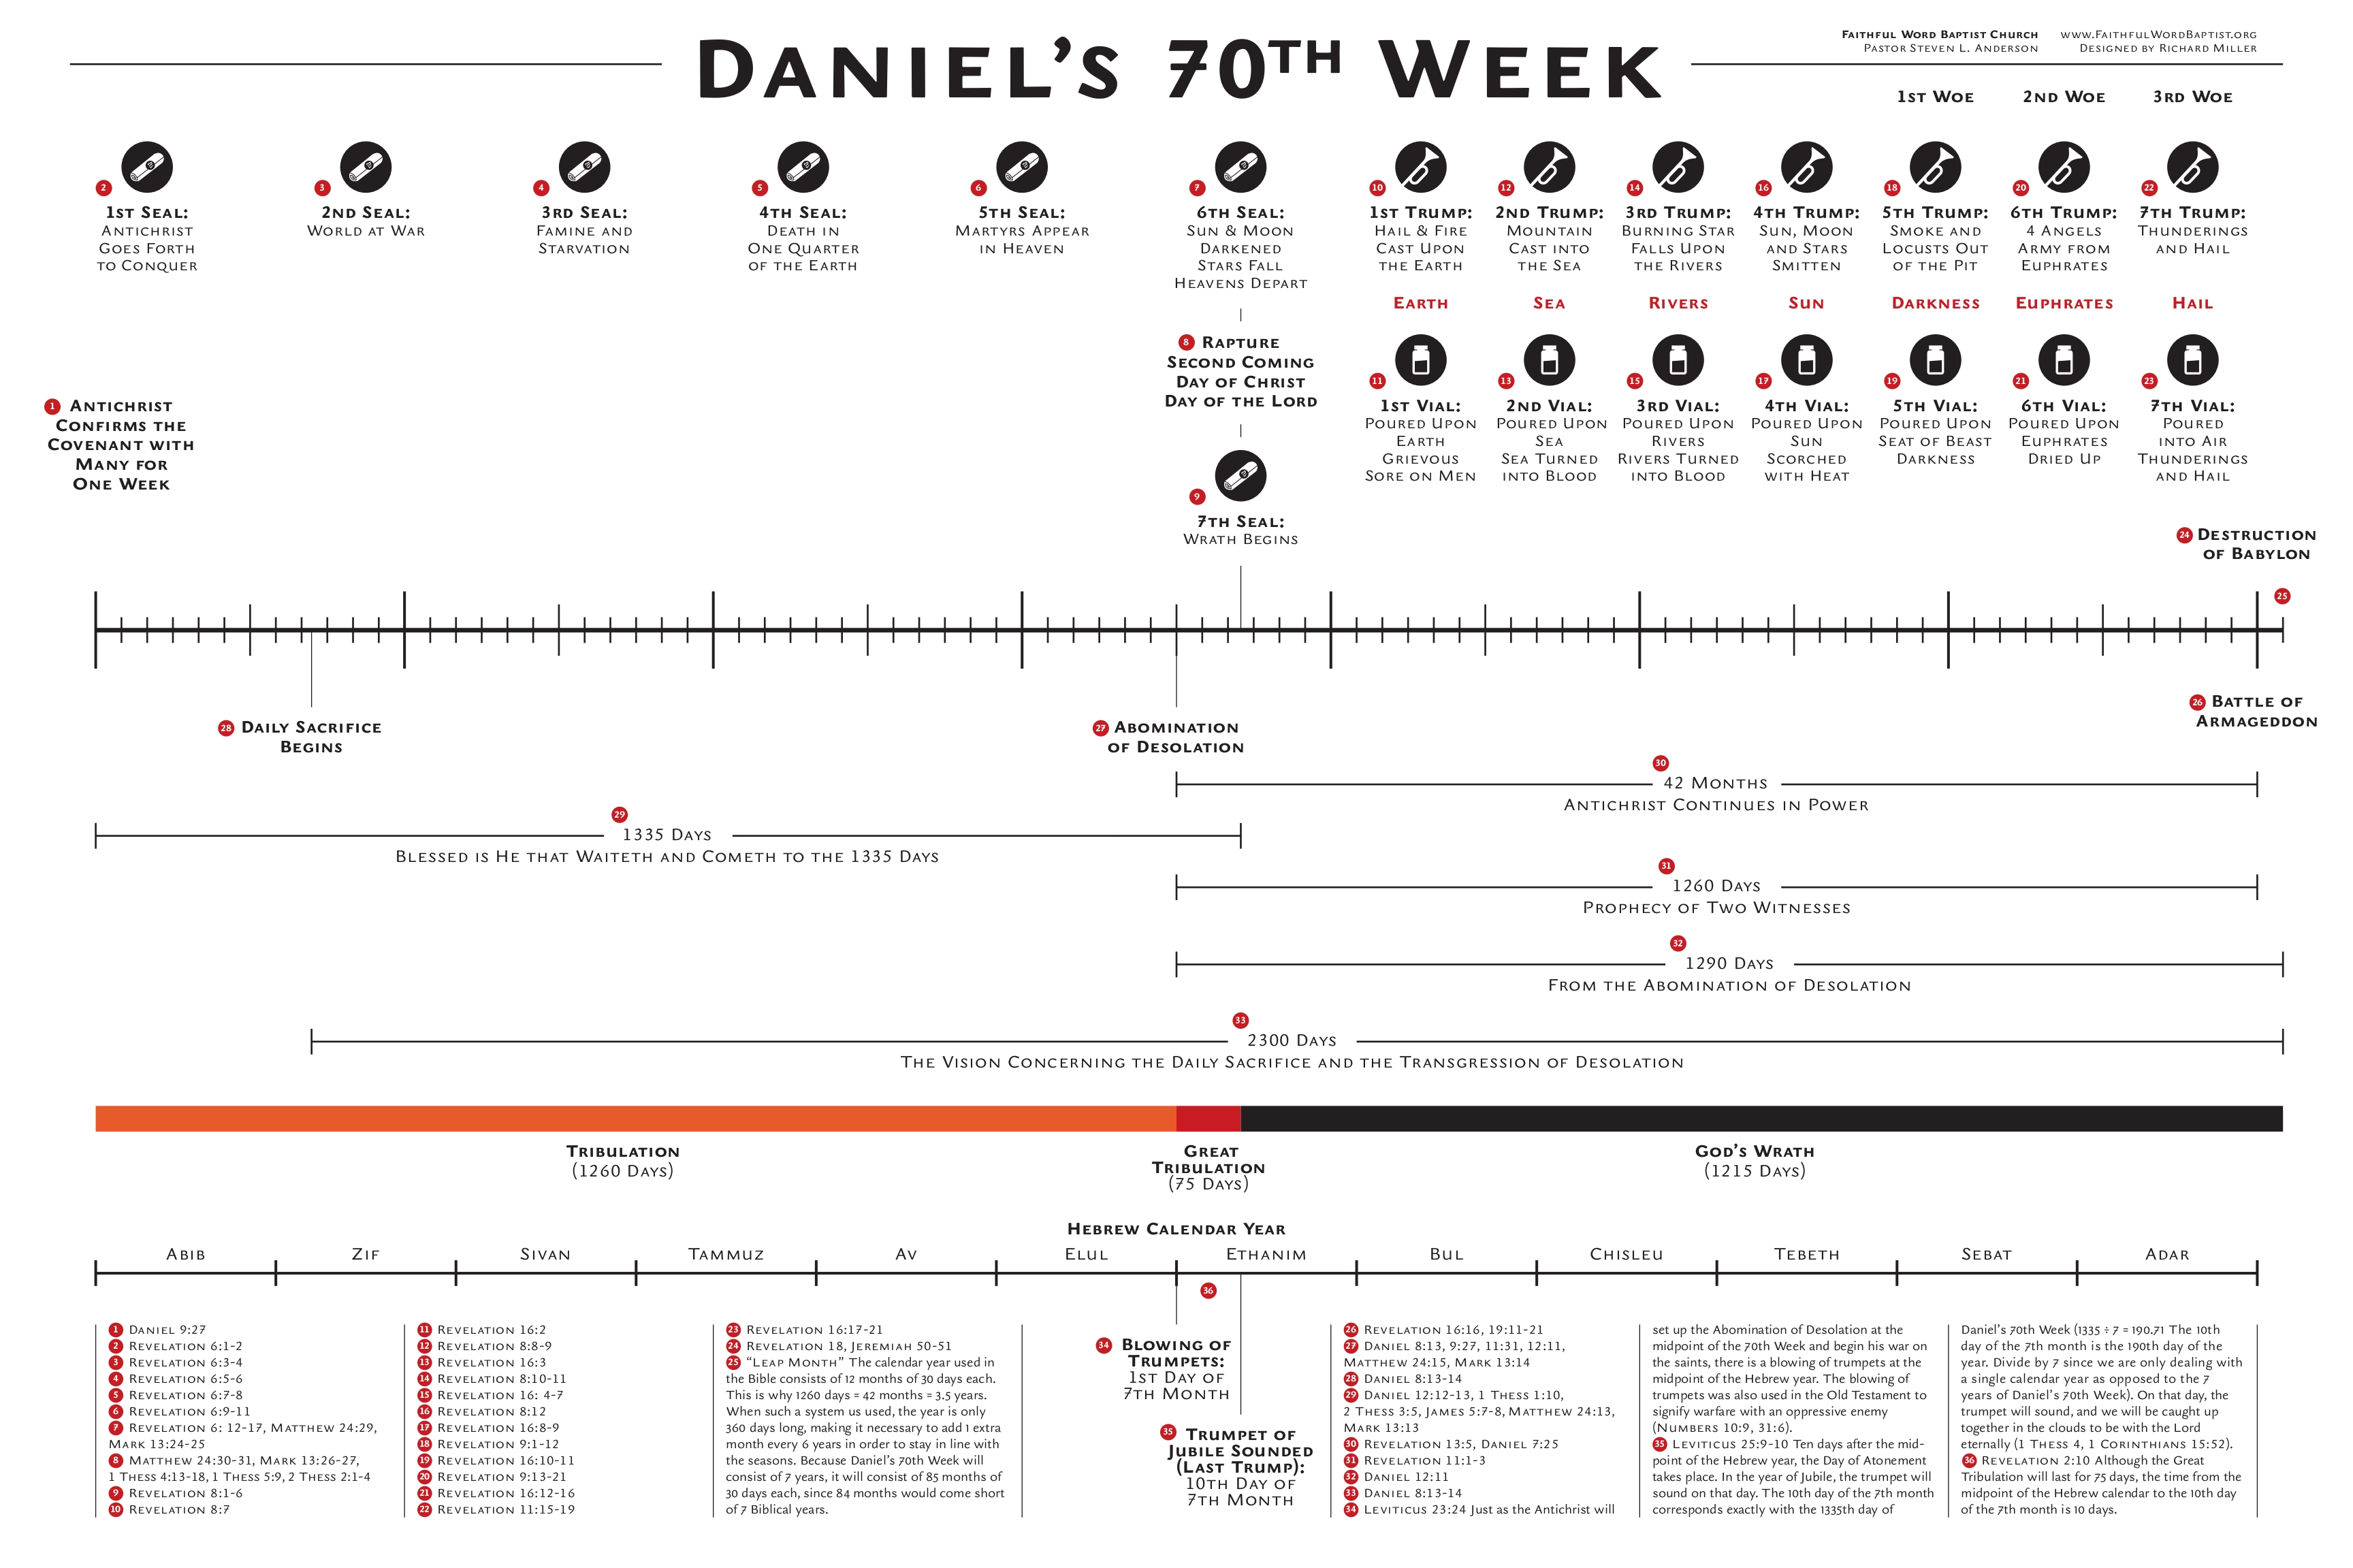 book of daniel timeline 2019